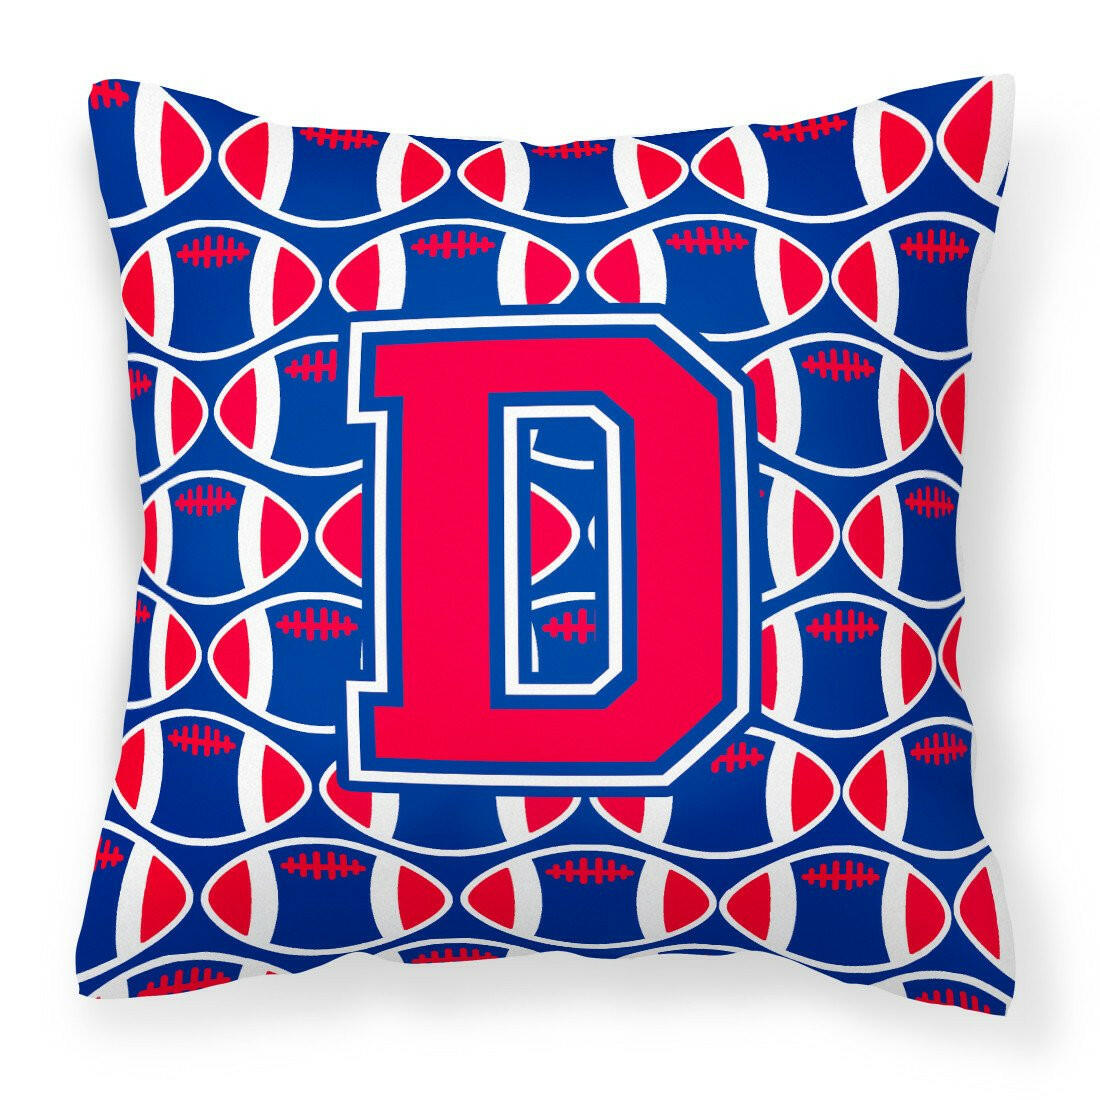 Letter D Football Harvard Crimson and Yale Blue Fabric Decorative Pillow CJ1076-DPW1414 by Caroline's Treasures